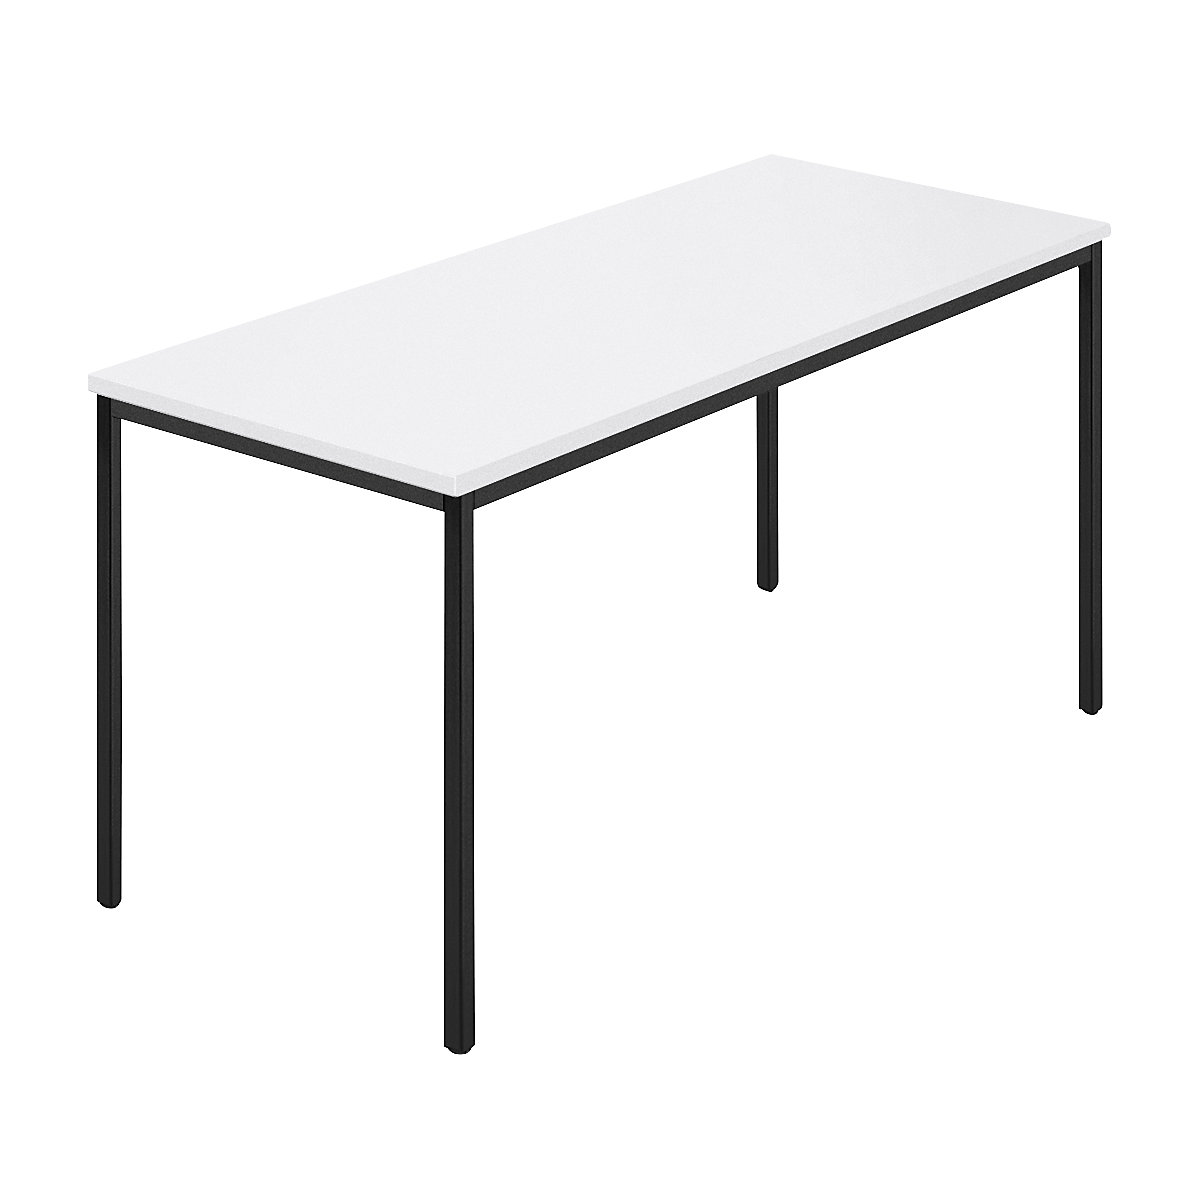 Pravouhlý stôl, štvorhranná rúrka s povrchovou úpravou, š x h 1400 x 700 mm, biela / antracitová-6